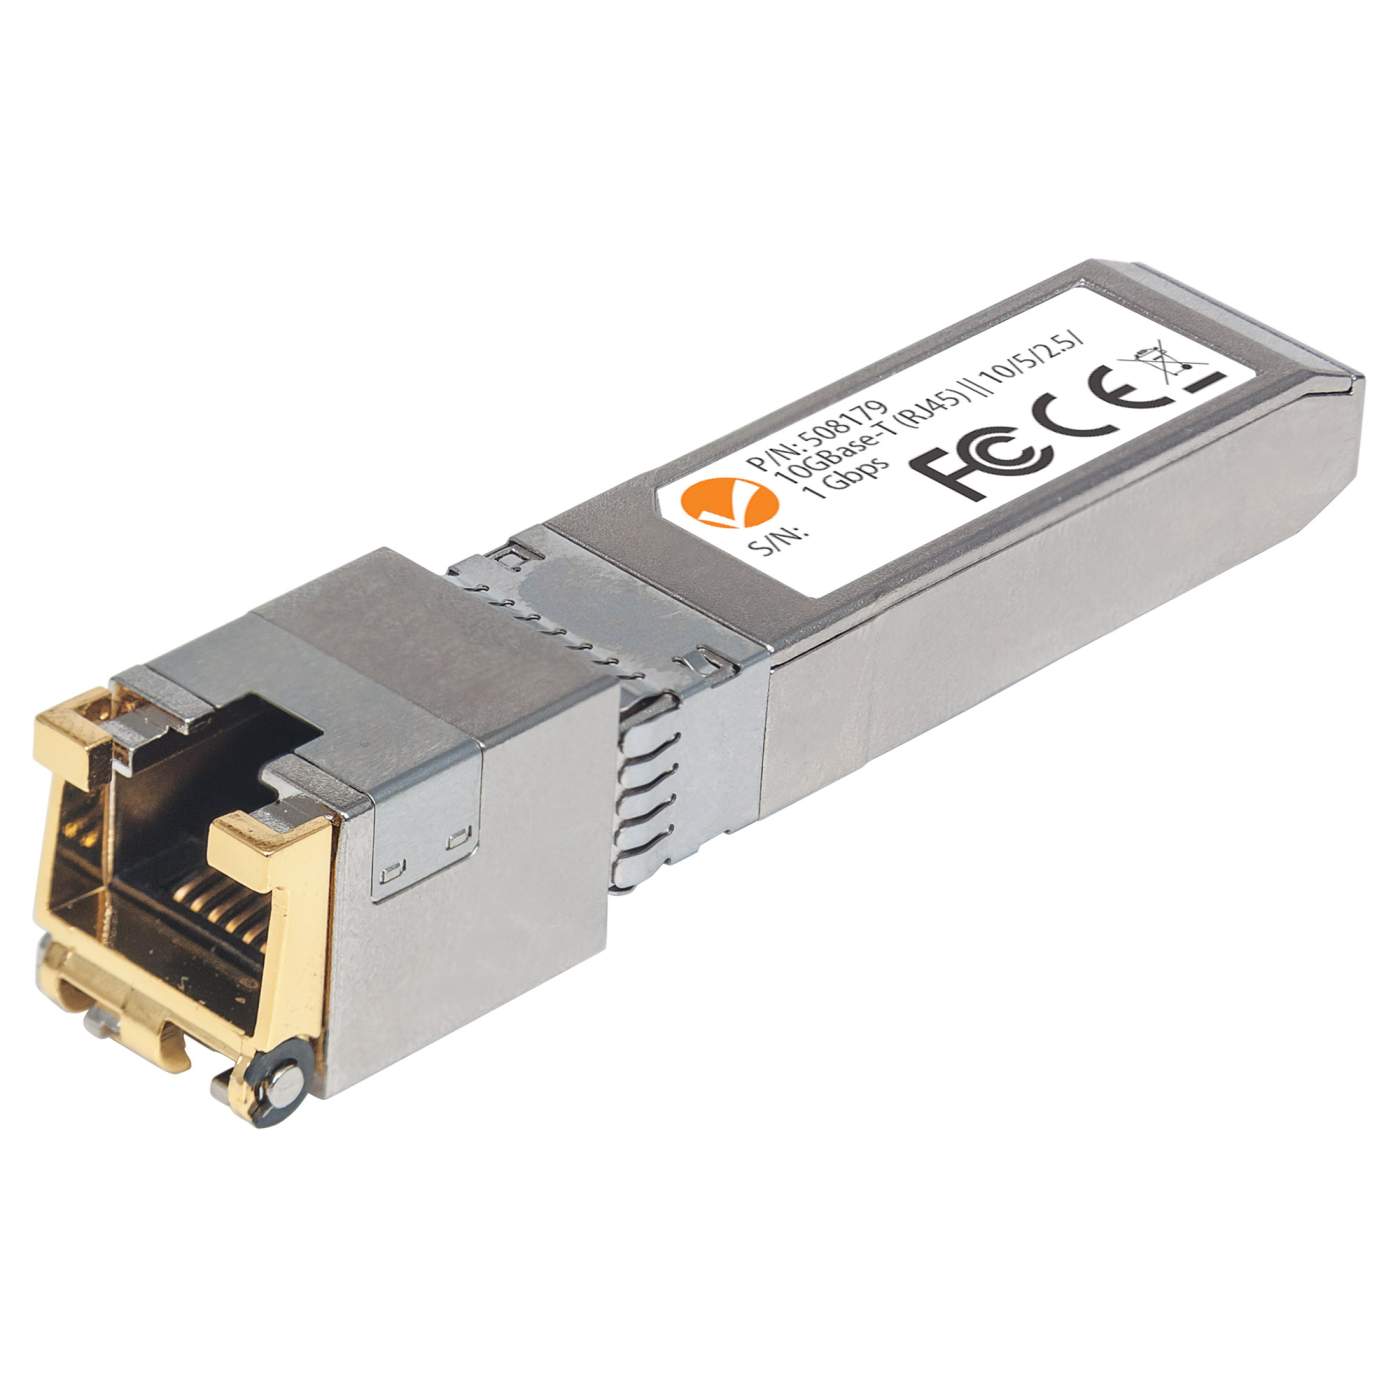 10 Gigabit SFP+ Modul / Mini-GBIC Transceiver für RJ45-Kabel Image 1